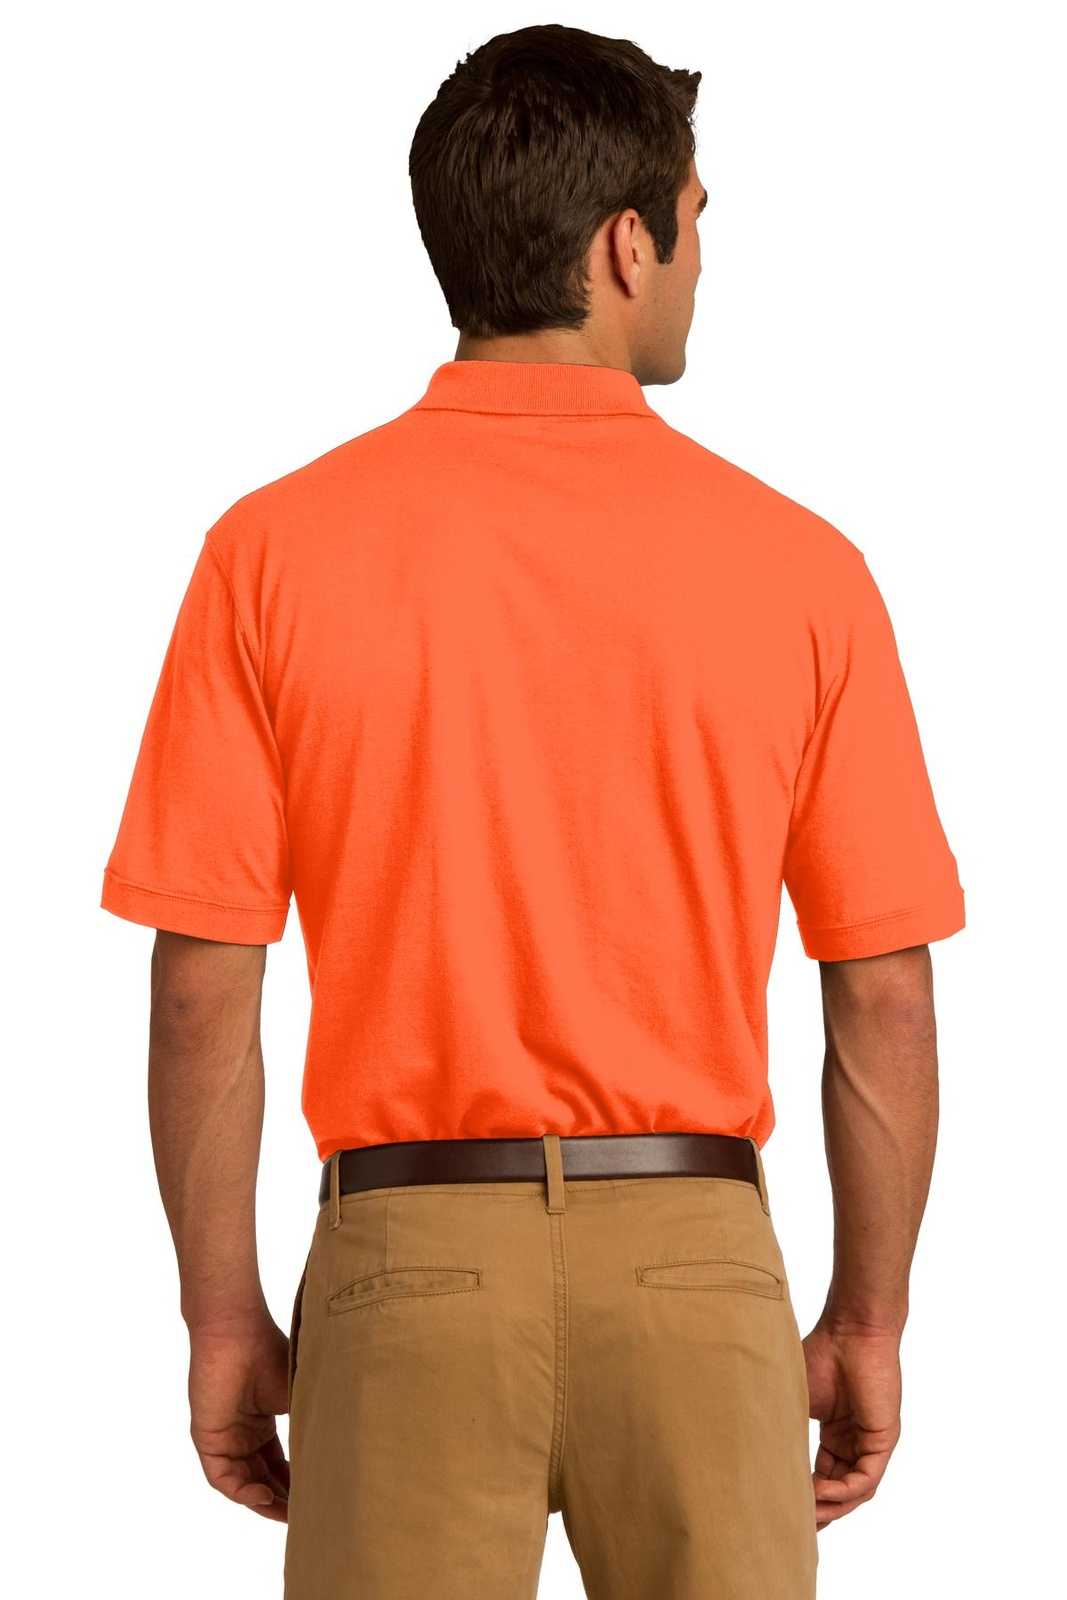 Port &amp; Company KP55P Core Blend Jersey Knit Pocket Polo - Safety Orange - HIT a Double - 2